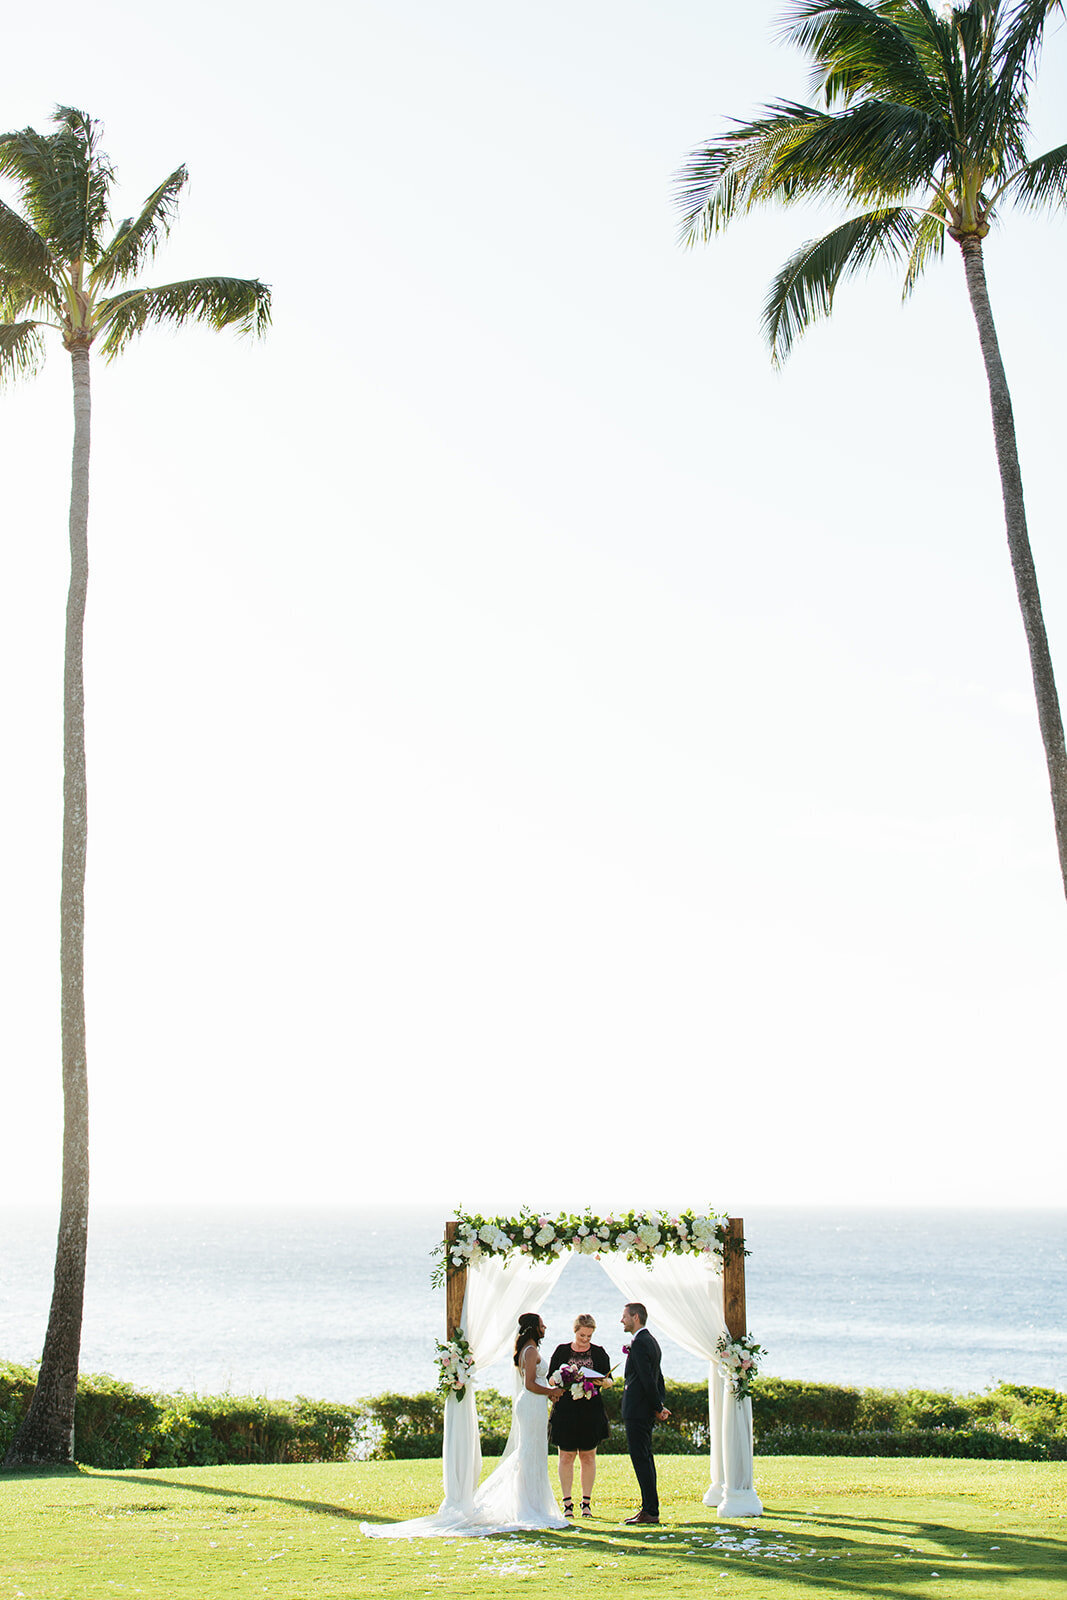 Maui Love Weddings and Events Maui Hawaii Full Service Wedding Planning Coordinating Event Design Company Destination Wedding 8